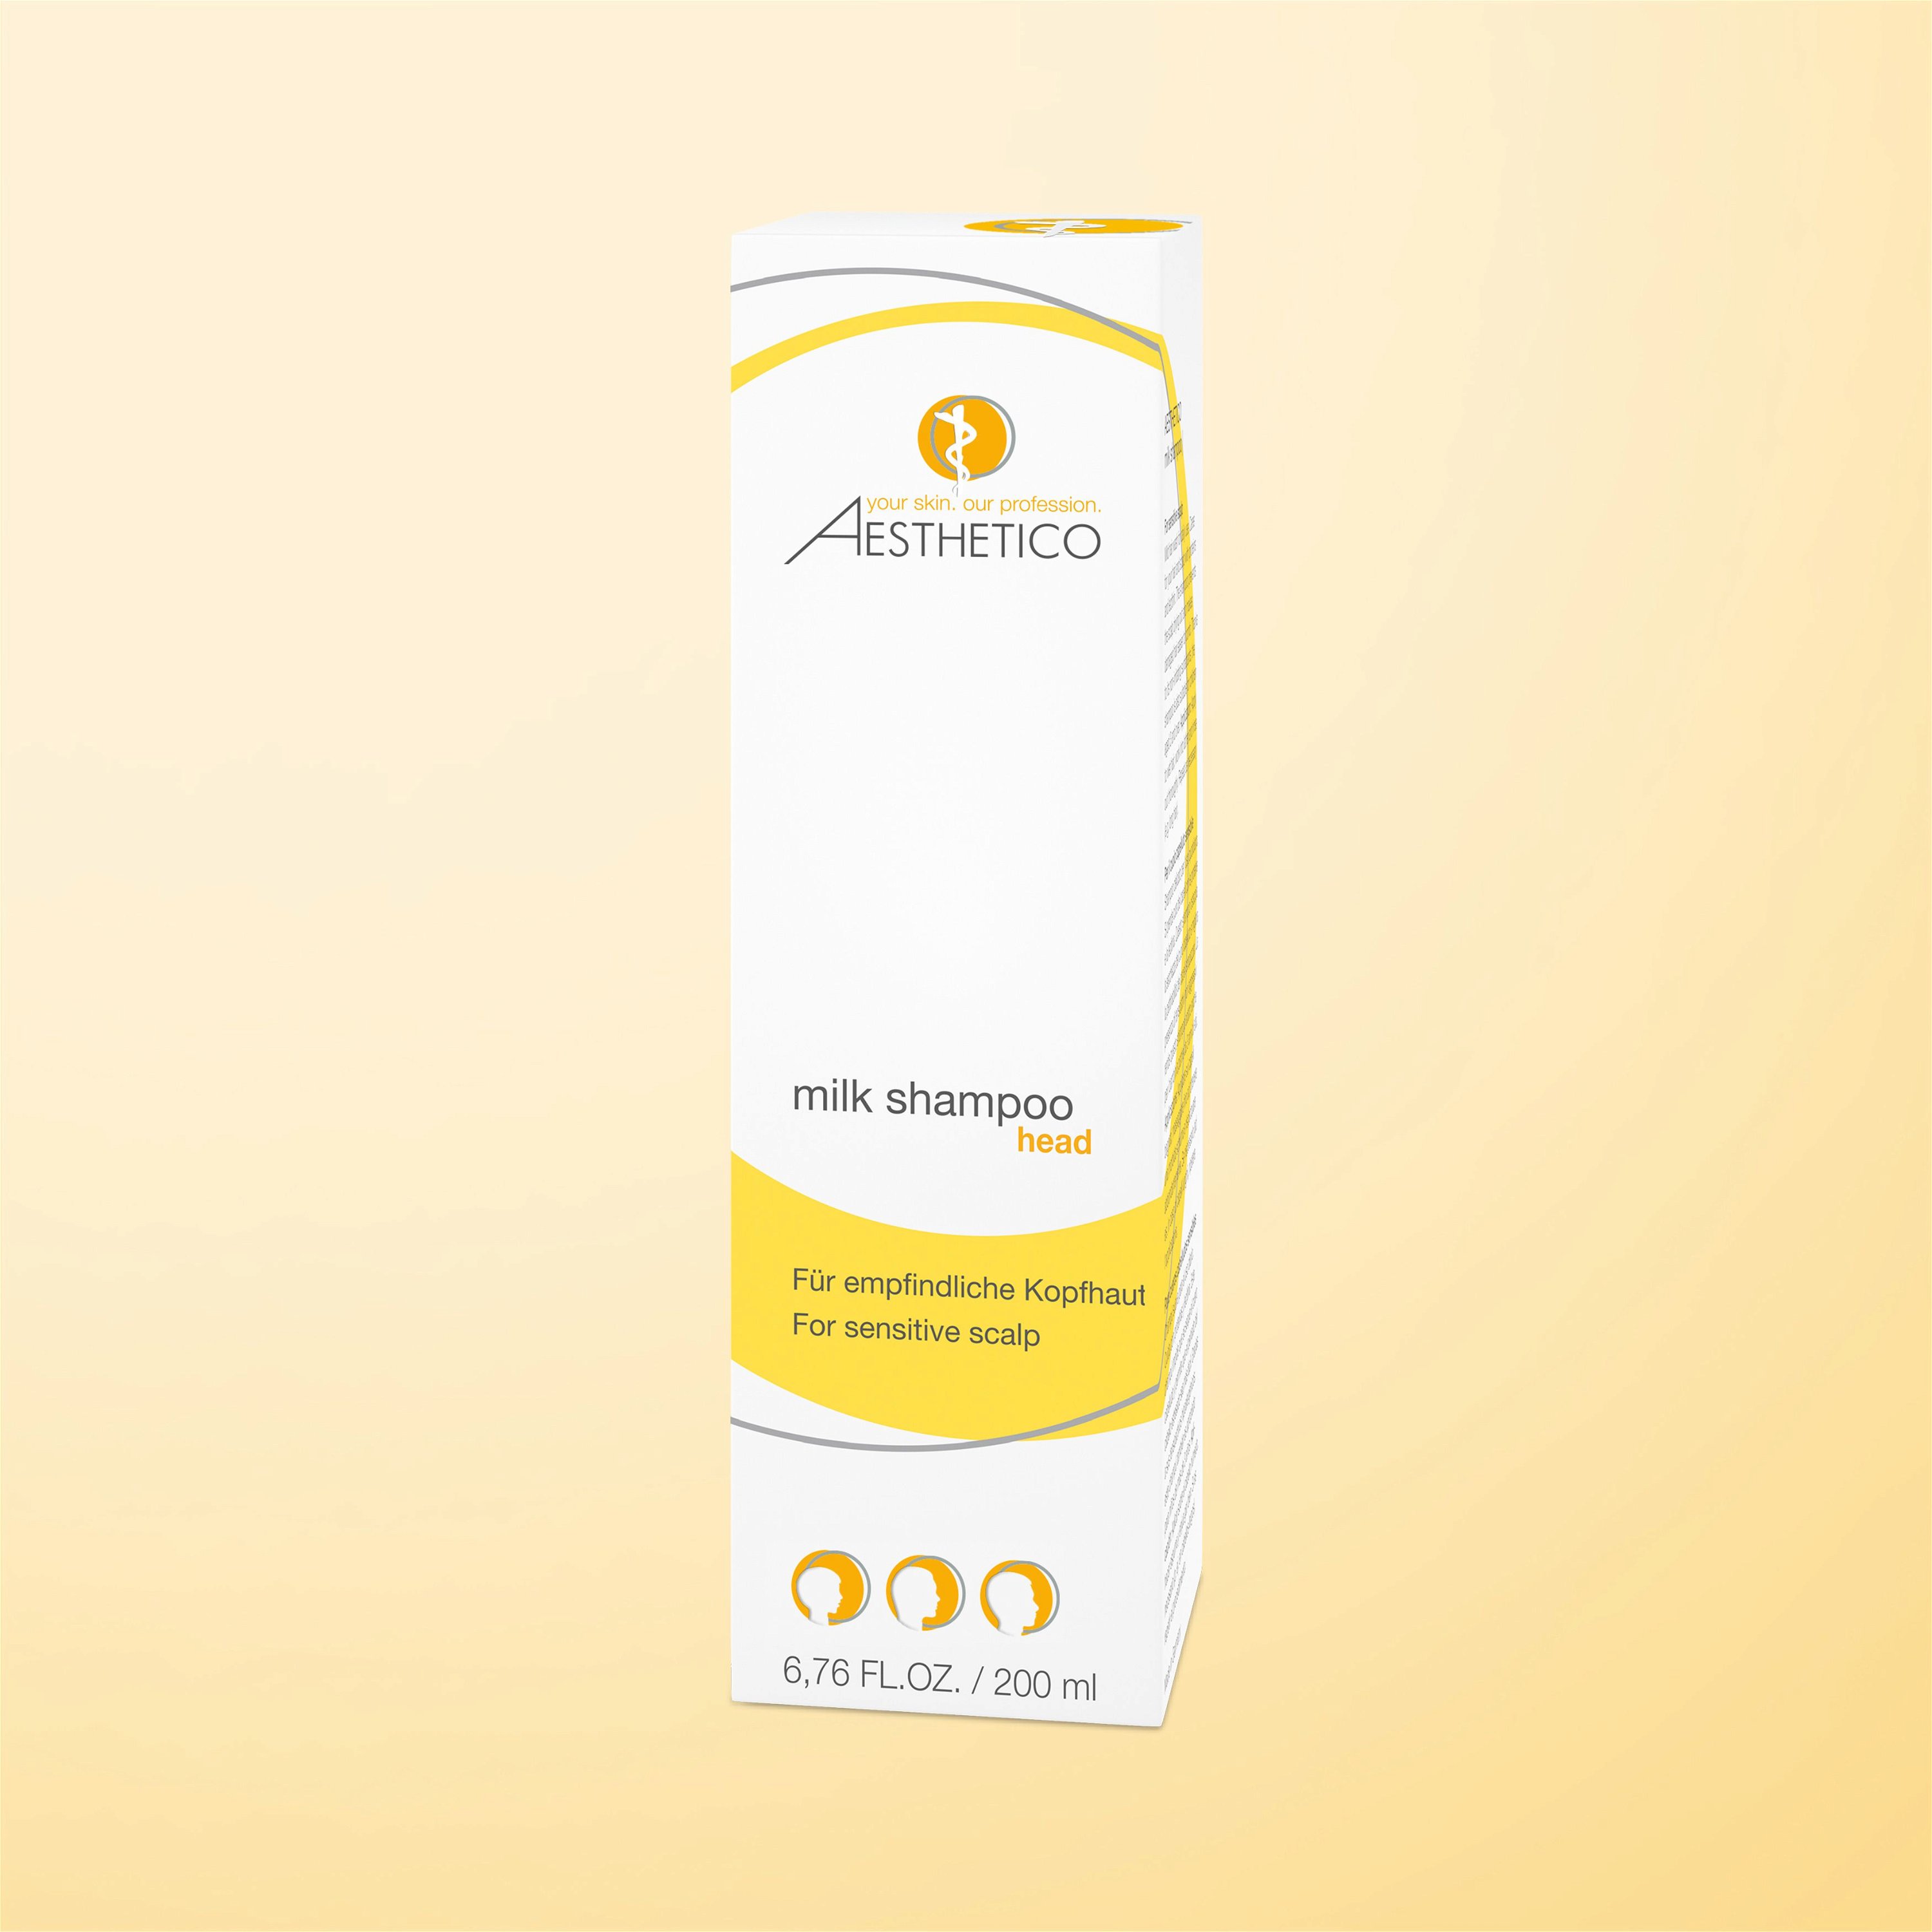 Umverpackung AESTHETICO milk shampoo, 200 ml